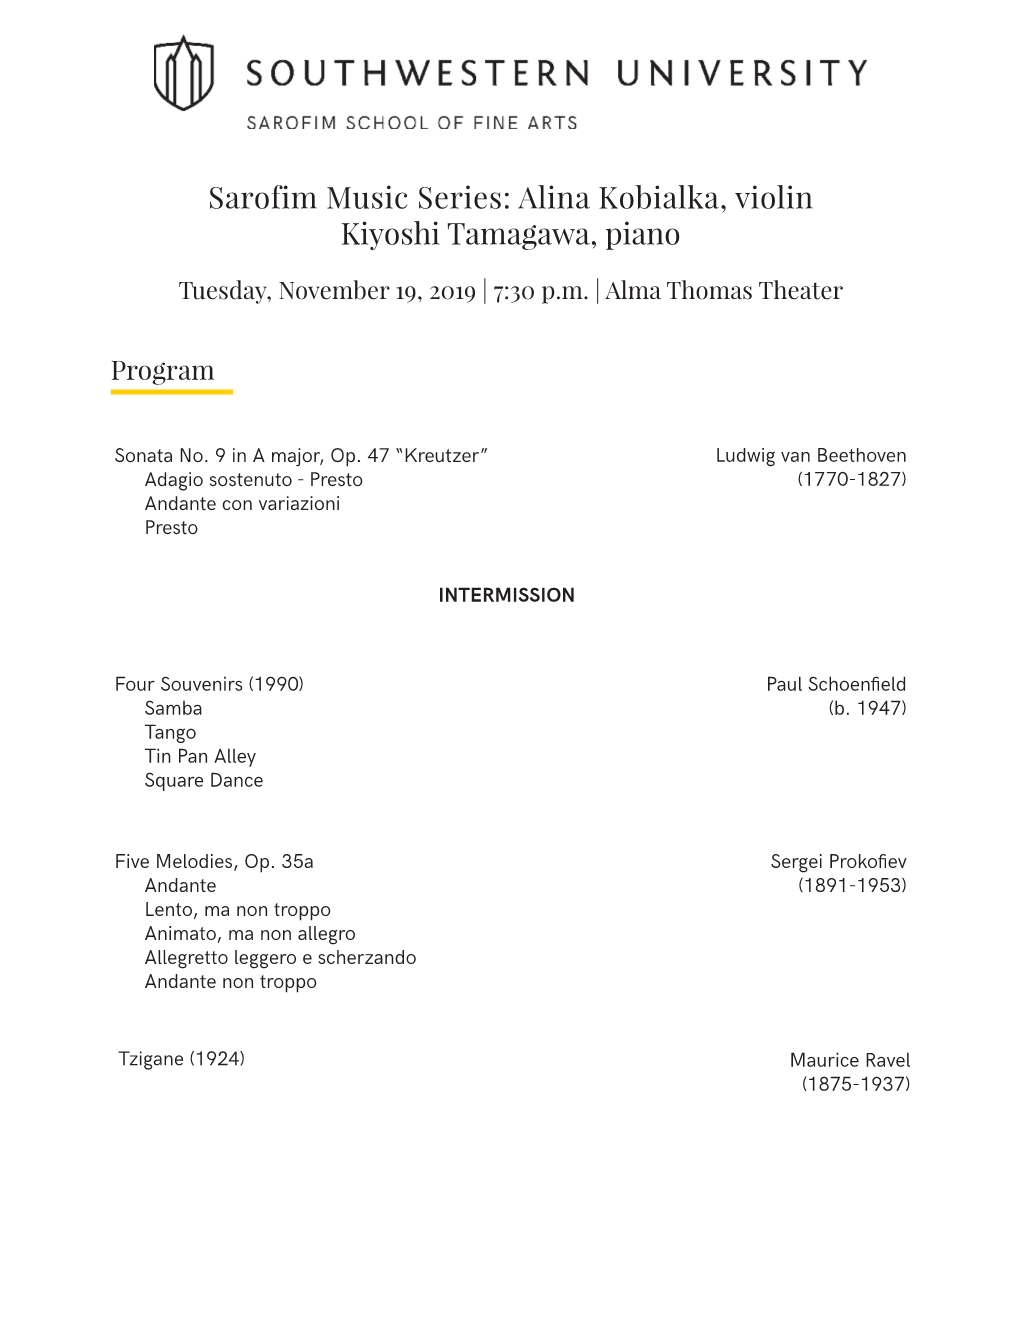 Sarofim Music Series: Alina Kobialka, Violin Kiyoshi Tamagawa, Piano